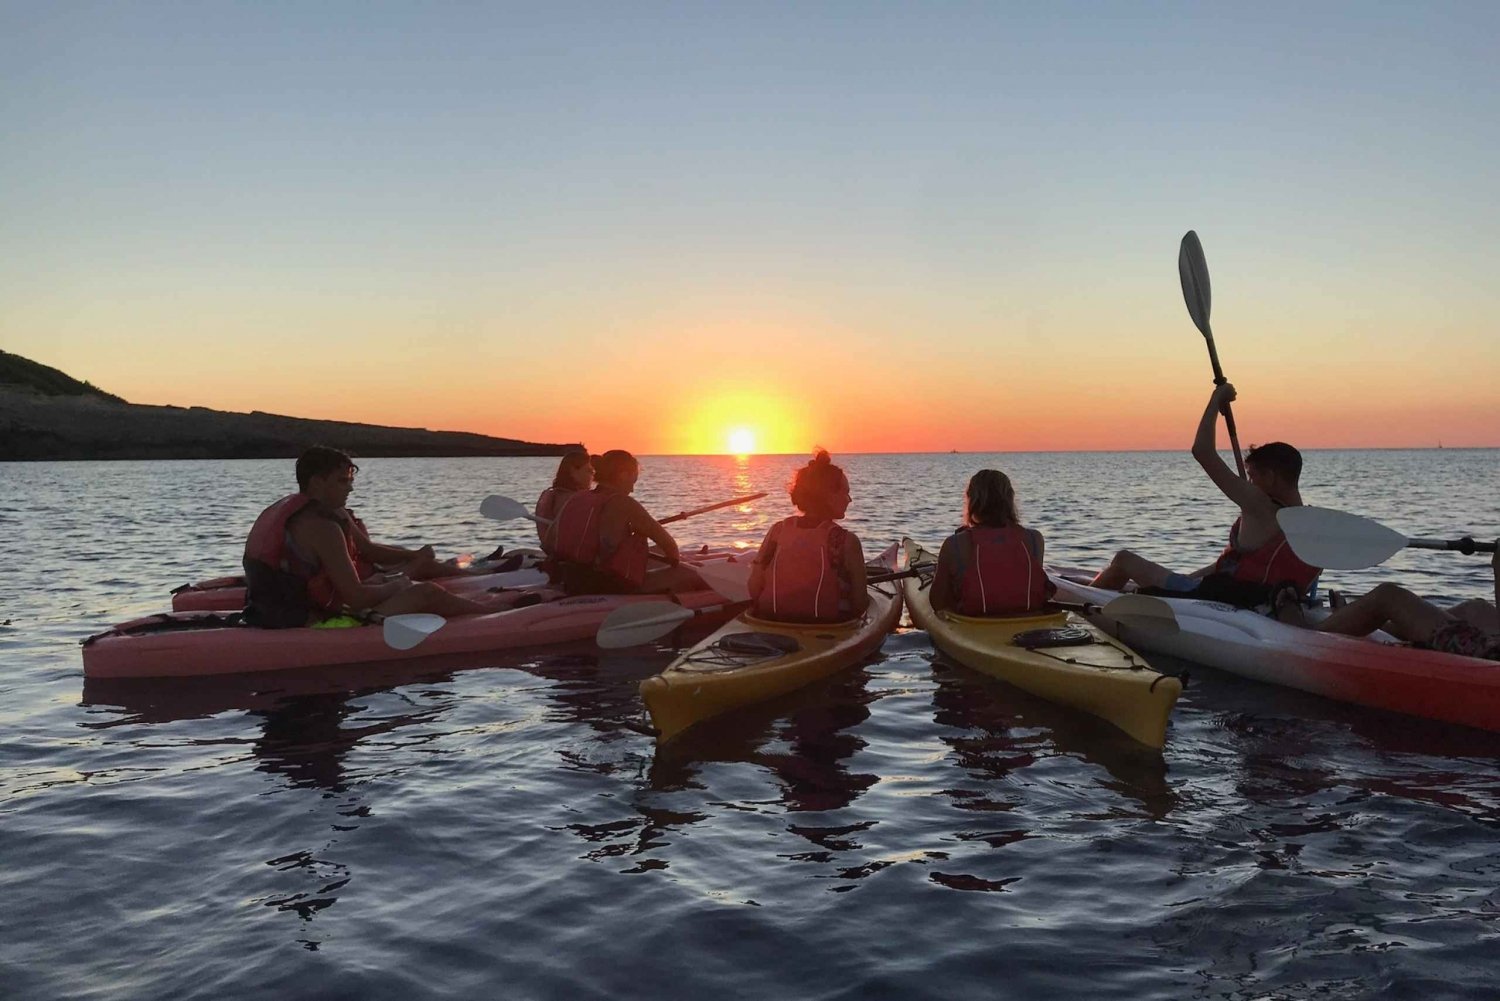 Ibiza: zeekajakken bij zonsondergang en zeegrottentour